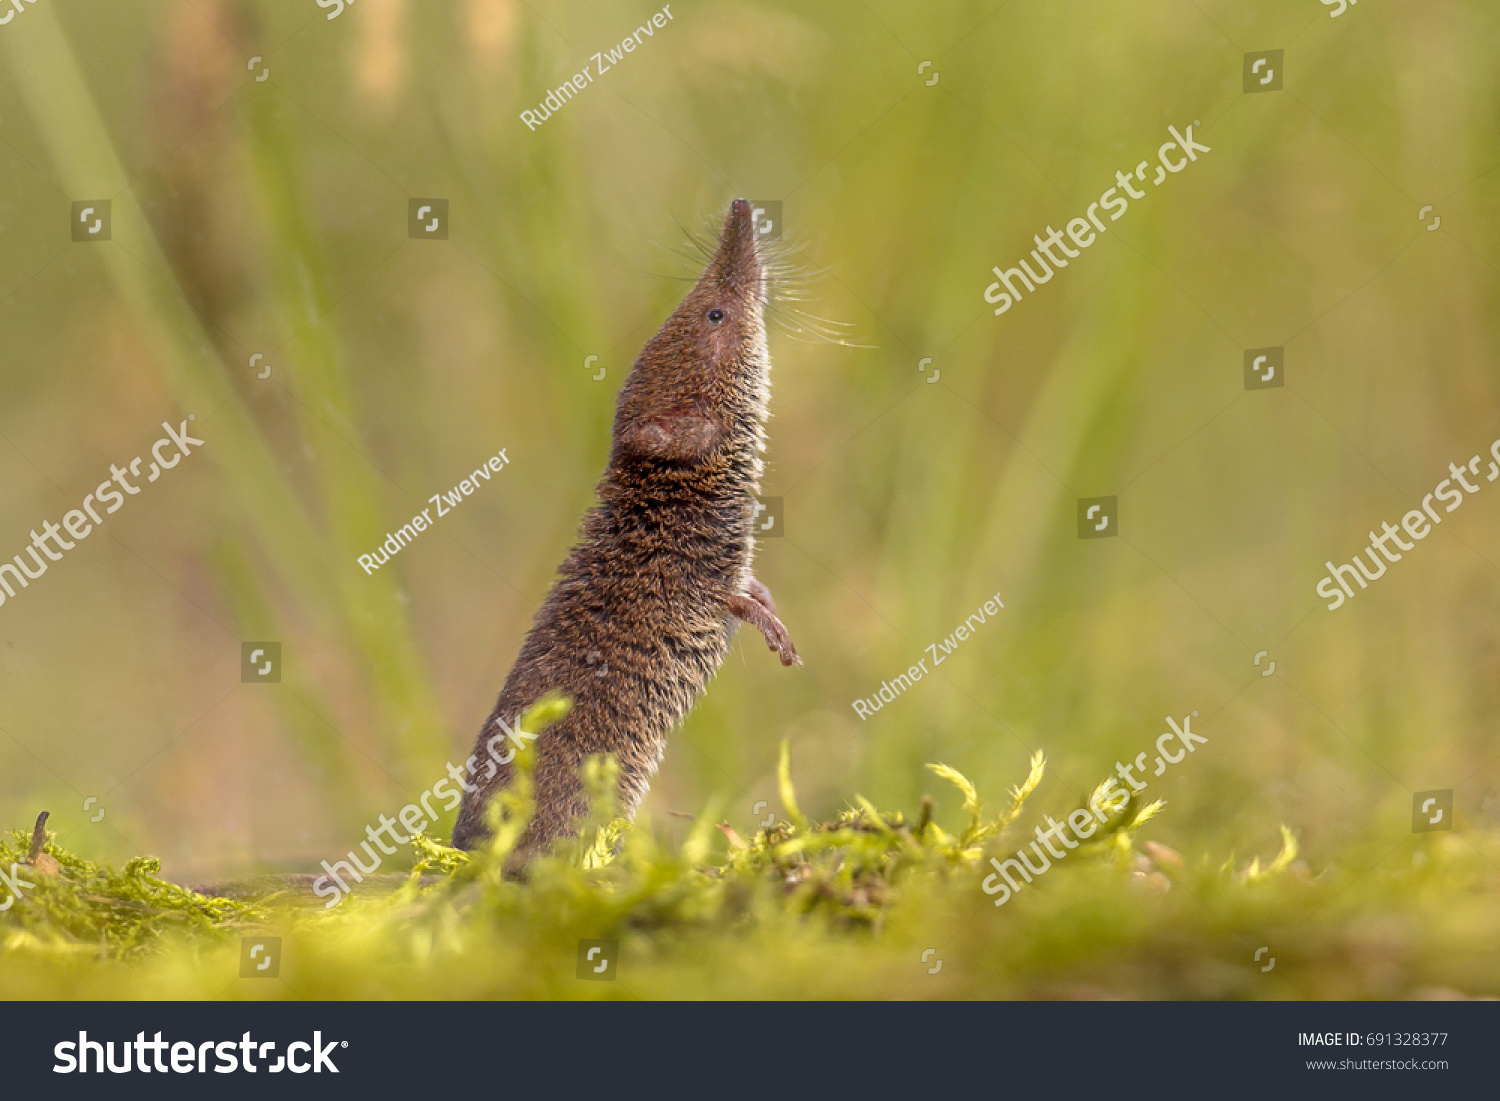 Eurasian pygmy shrew (Sorex minutus) sniffing and looking up in natural environment #691328377